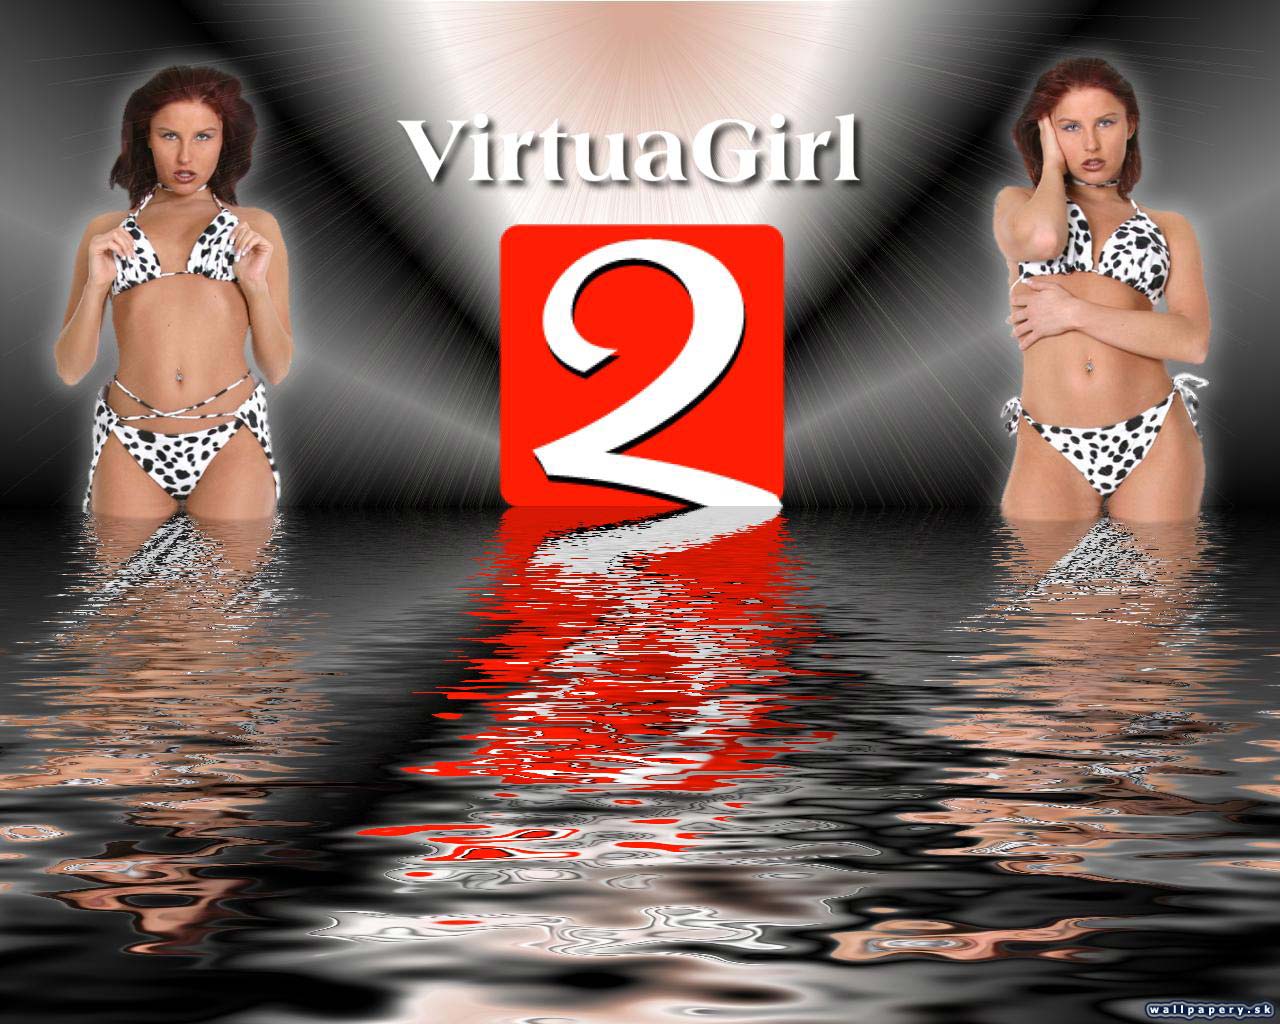 Virtuagirl 2 - wallpaper 71